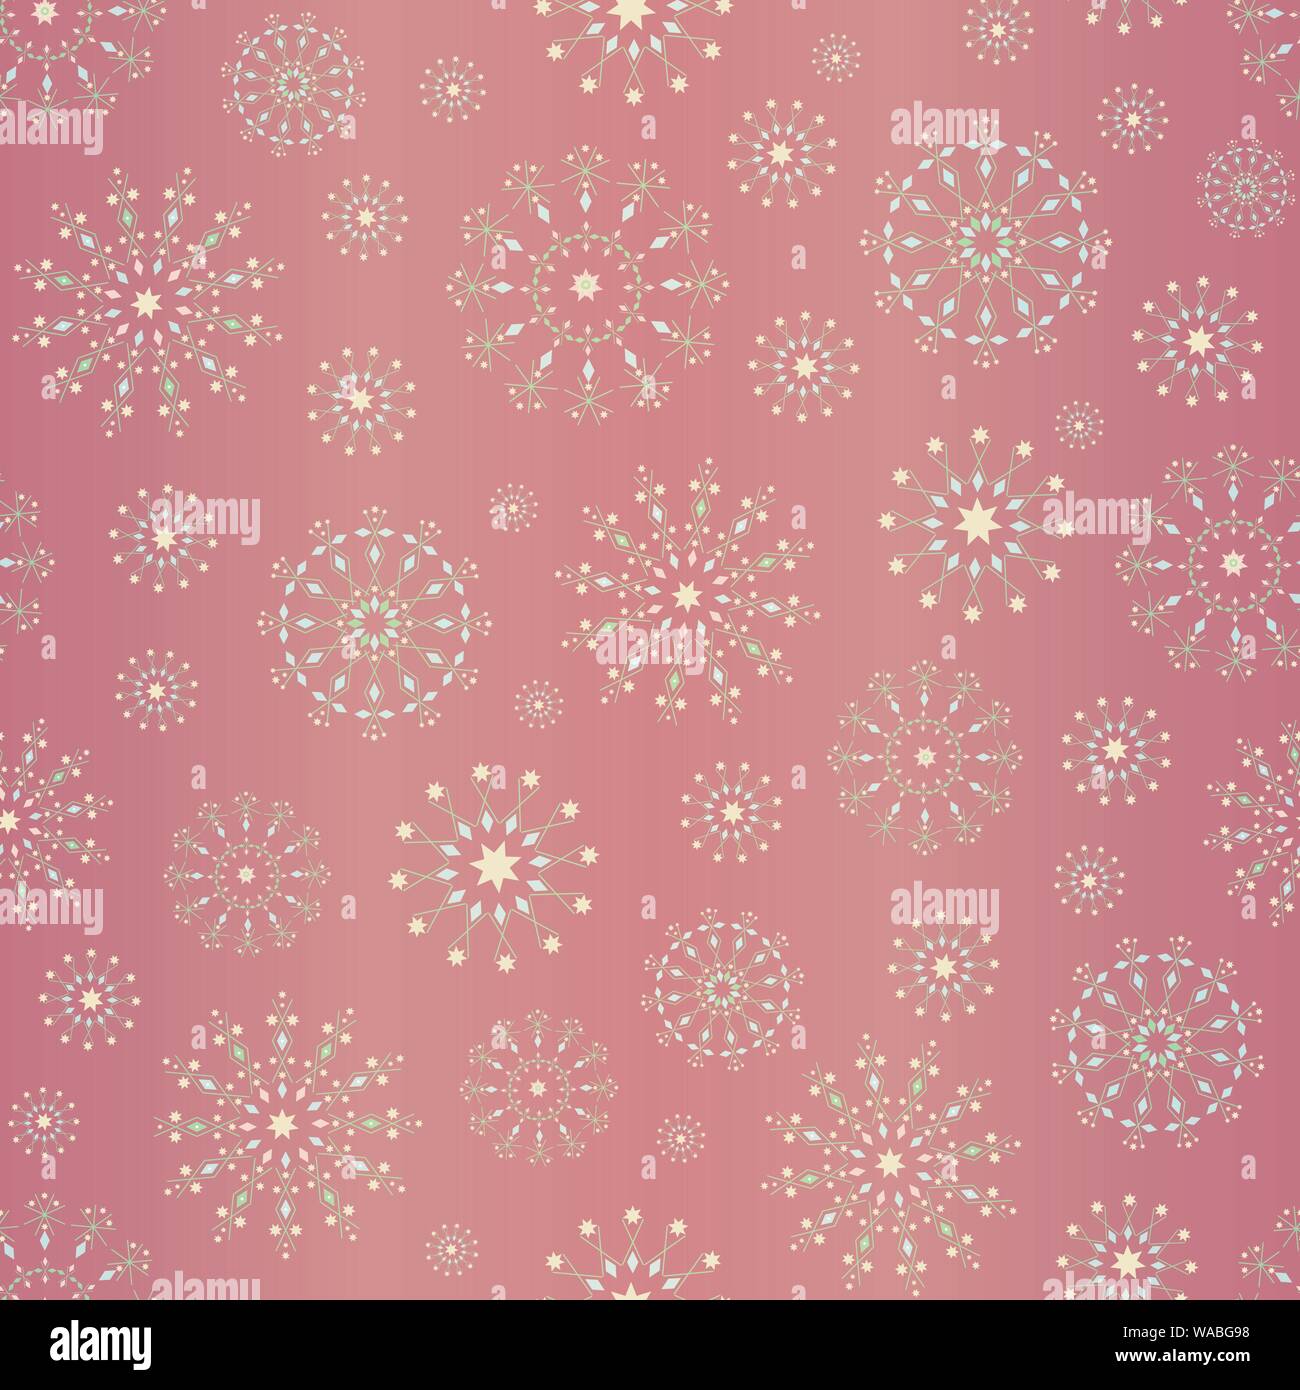 Elegant Snowflakes Christmas Design On Soft Pink Gold Foil